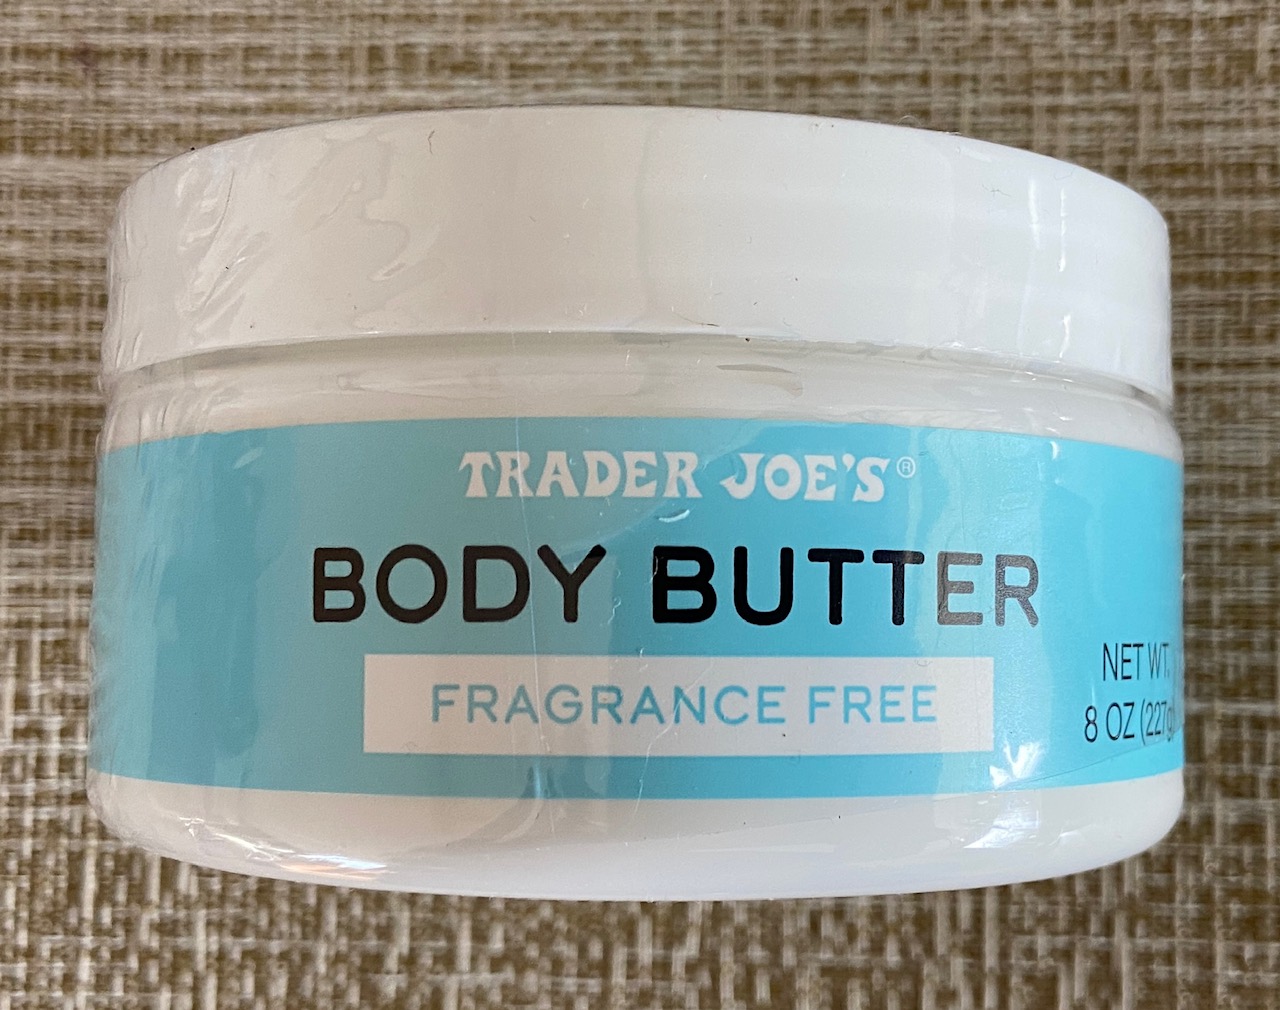 Trader Joe's Fragrance Free Body Butter side